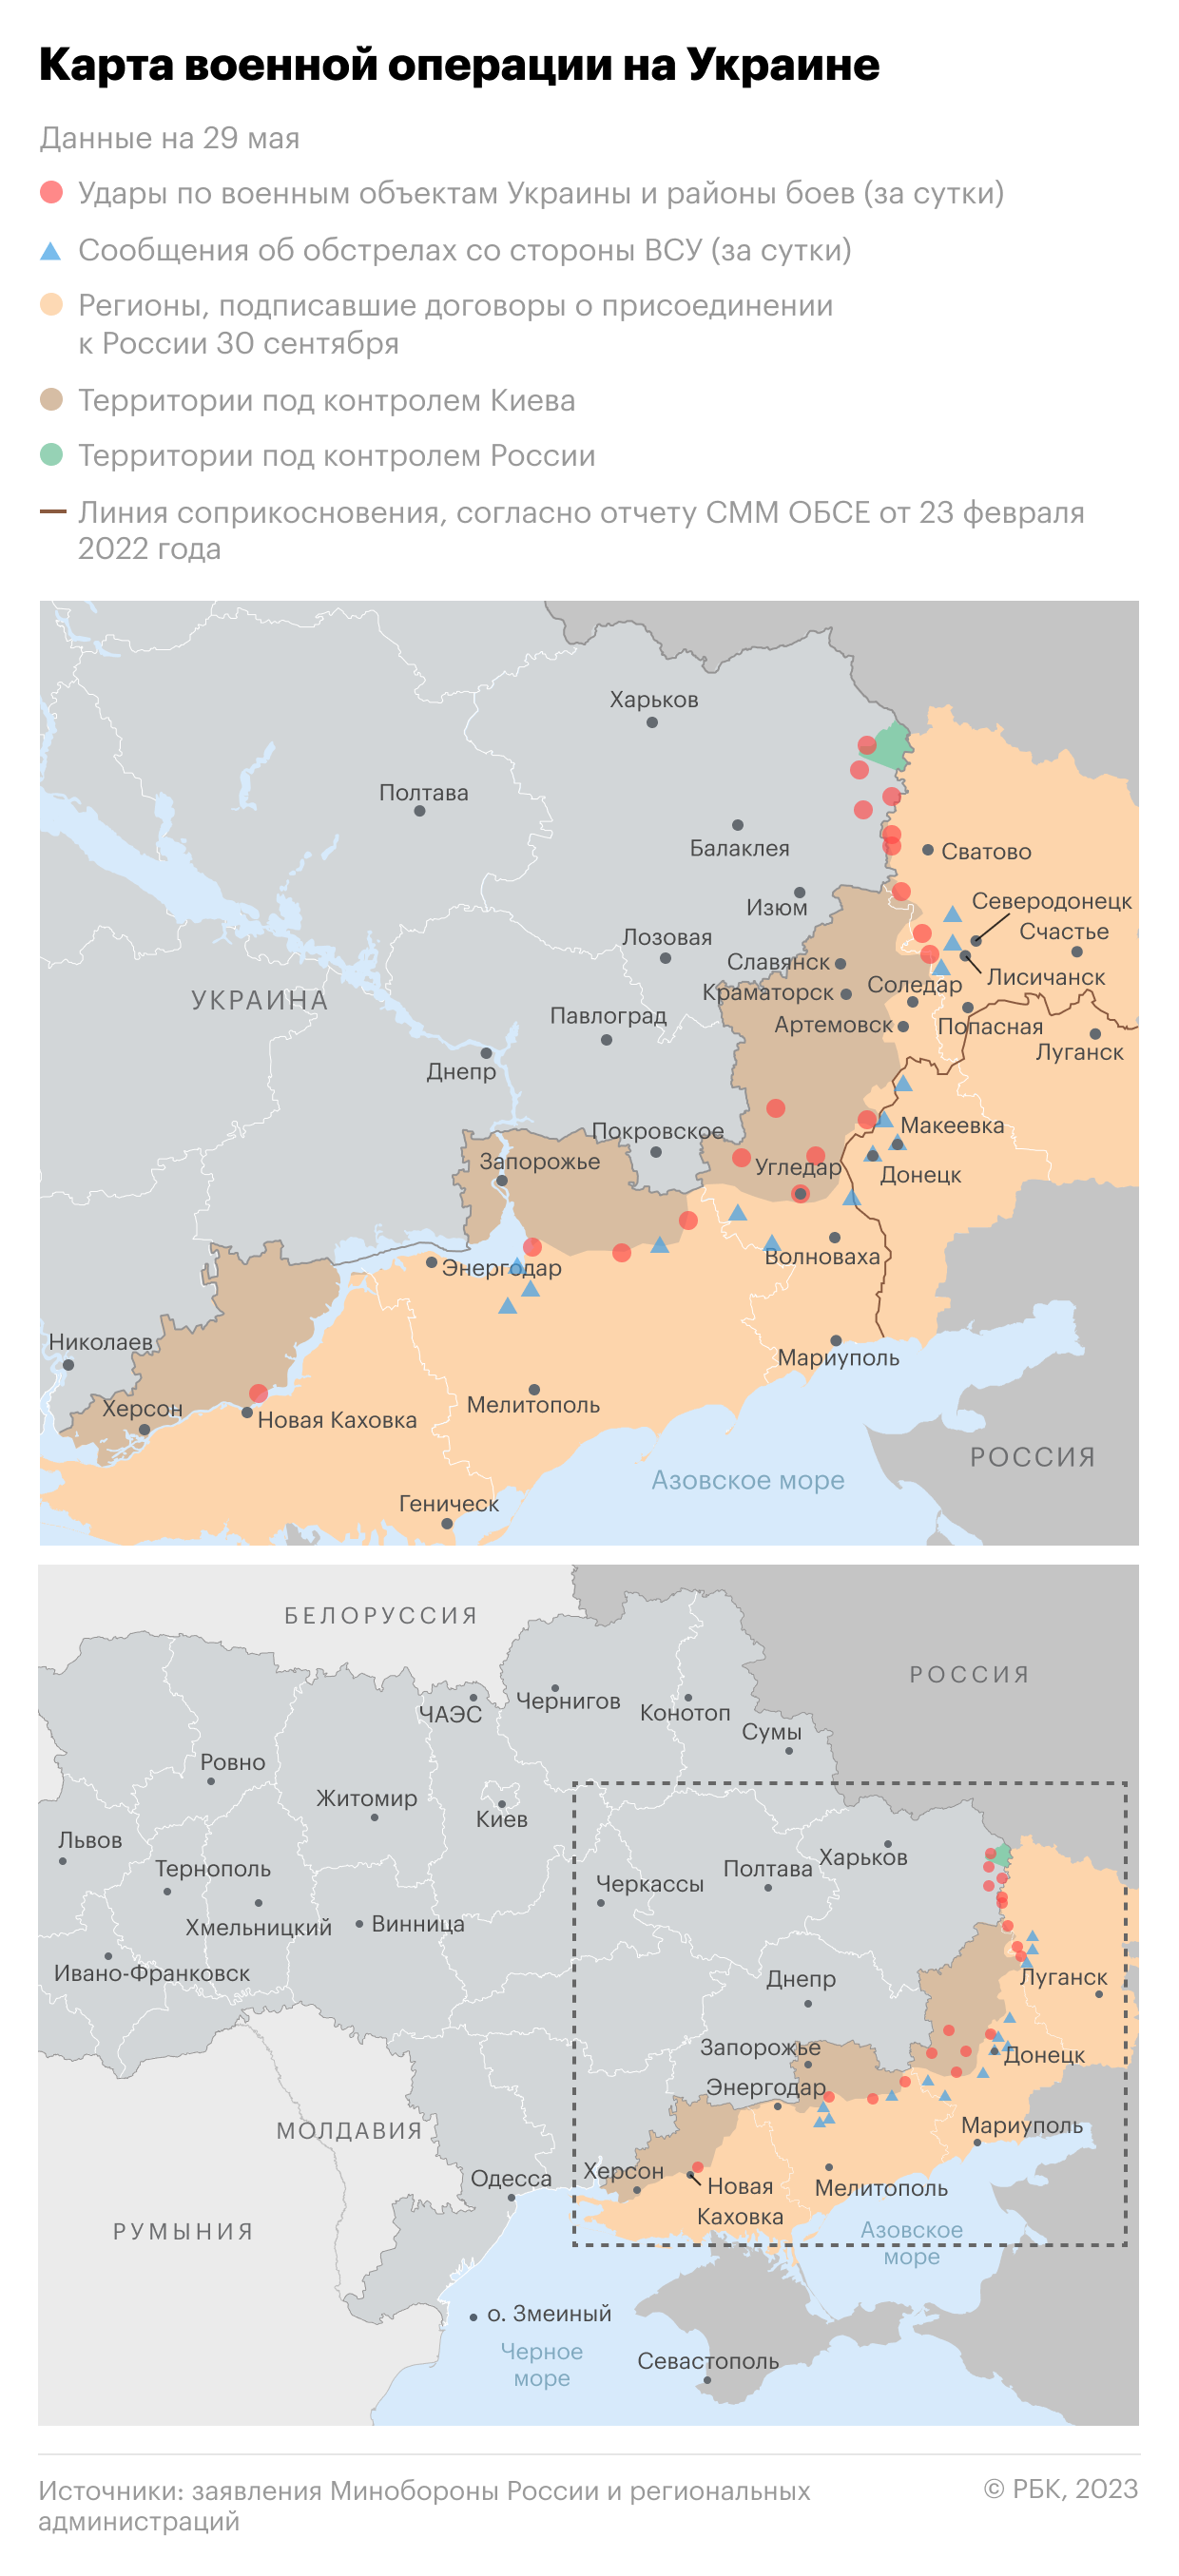 Военная операция на Украине. Карта на 29 мая